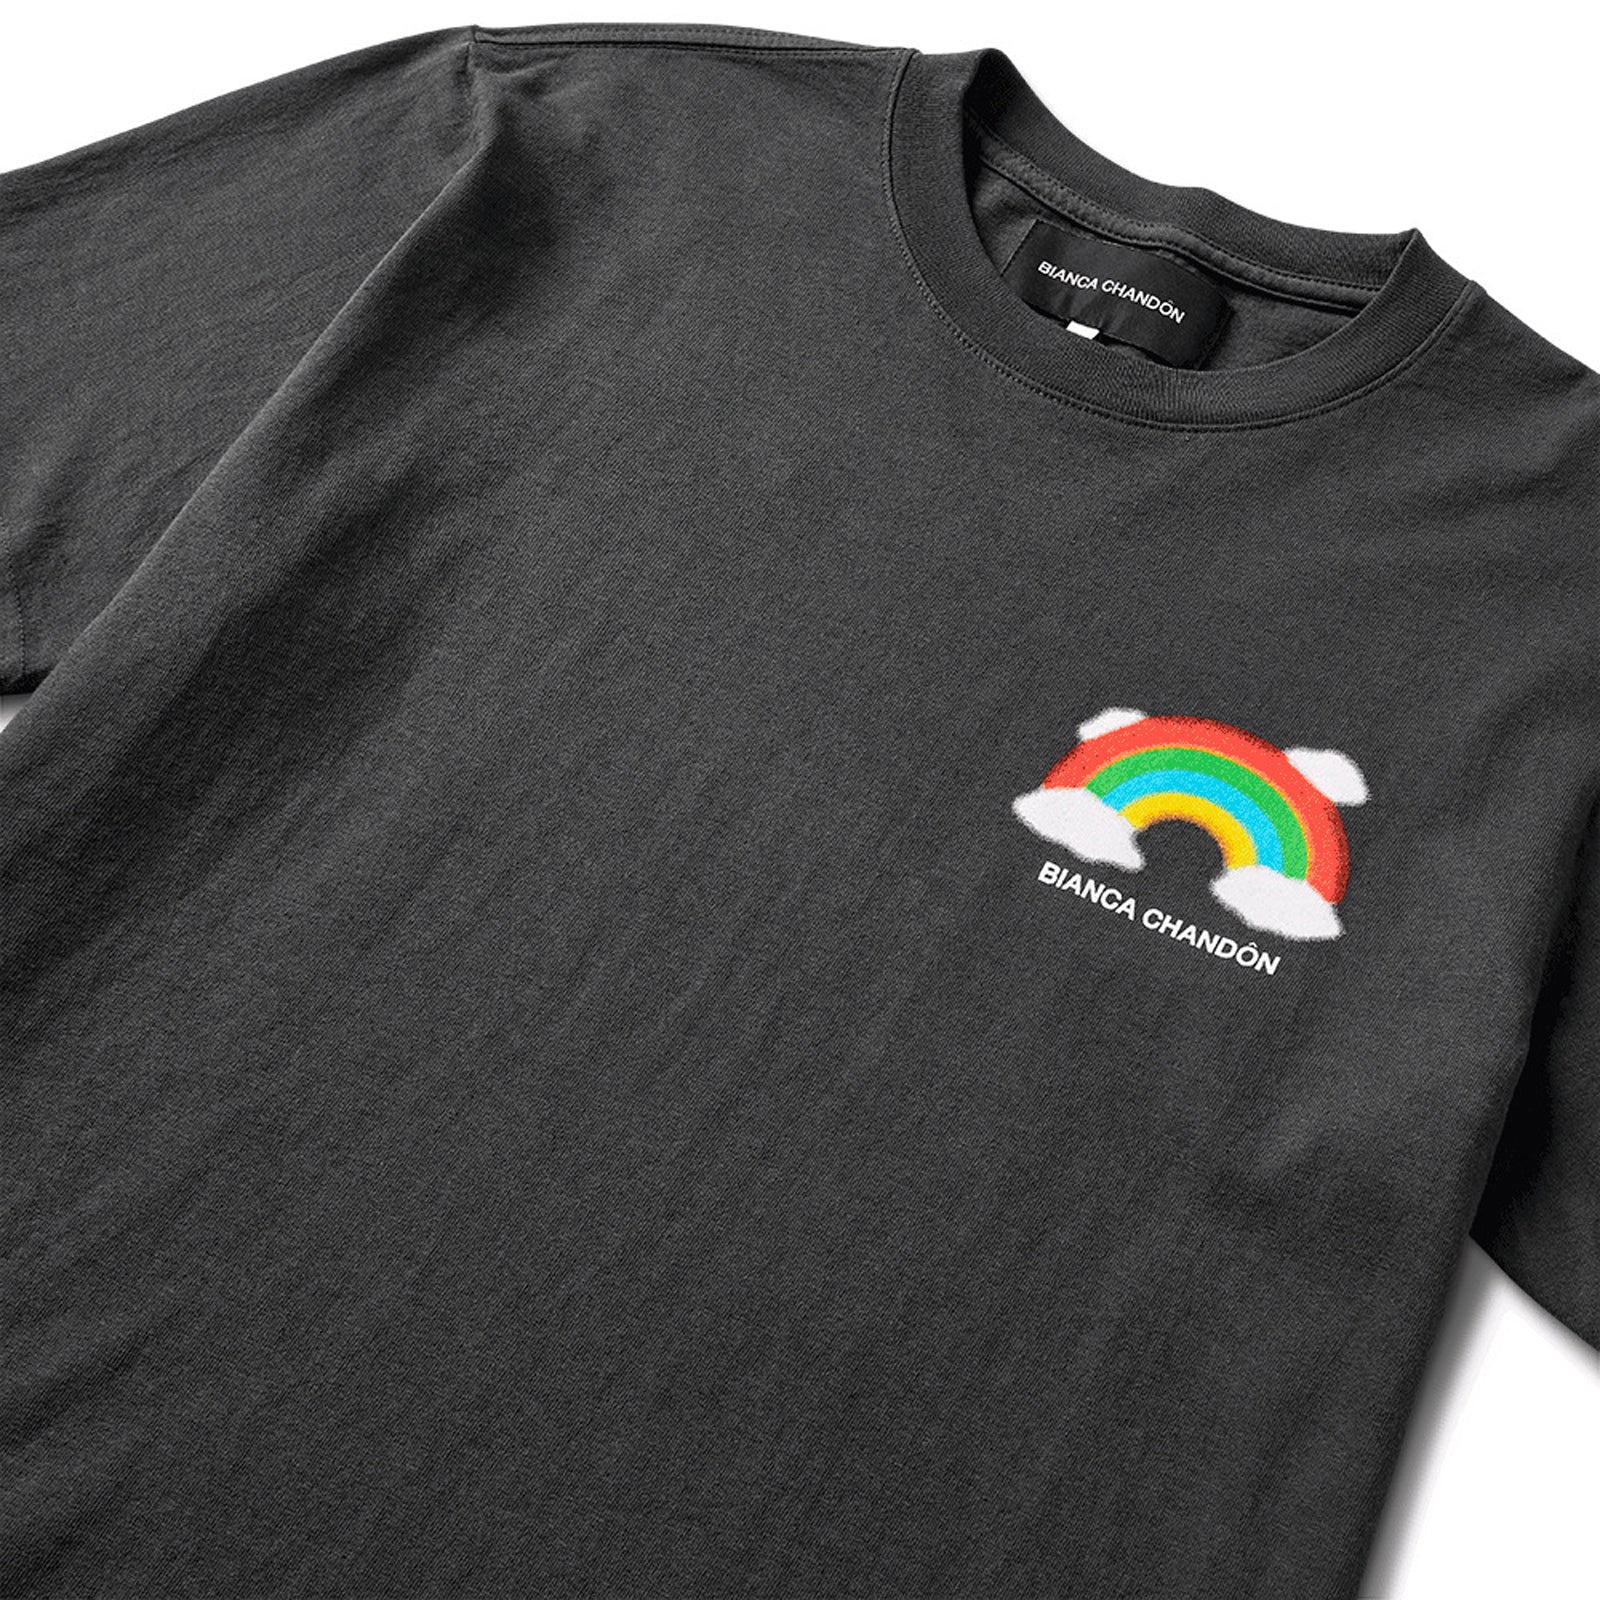 BIANCA CHANDON - Cloudy Rainbow T-Shirt - (Vintage Black) view 2